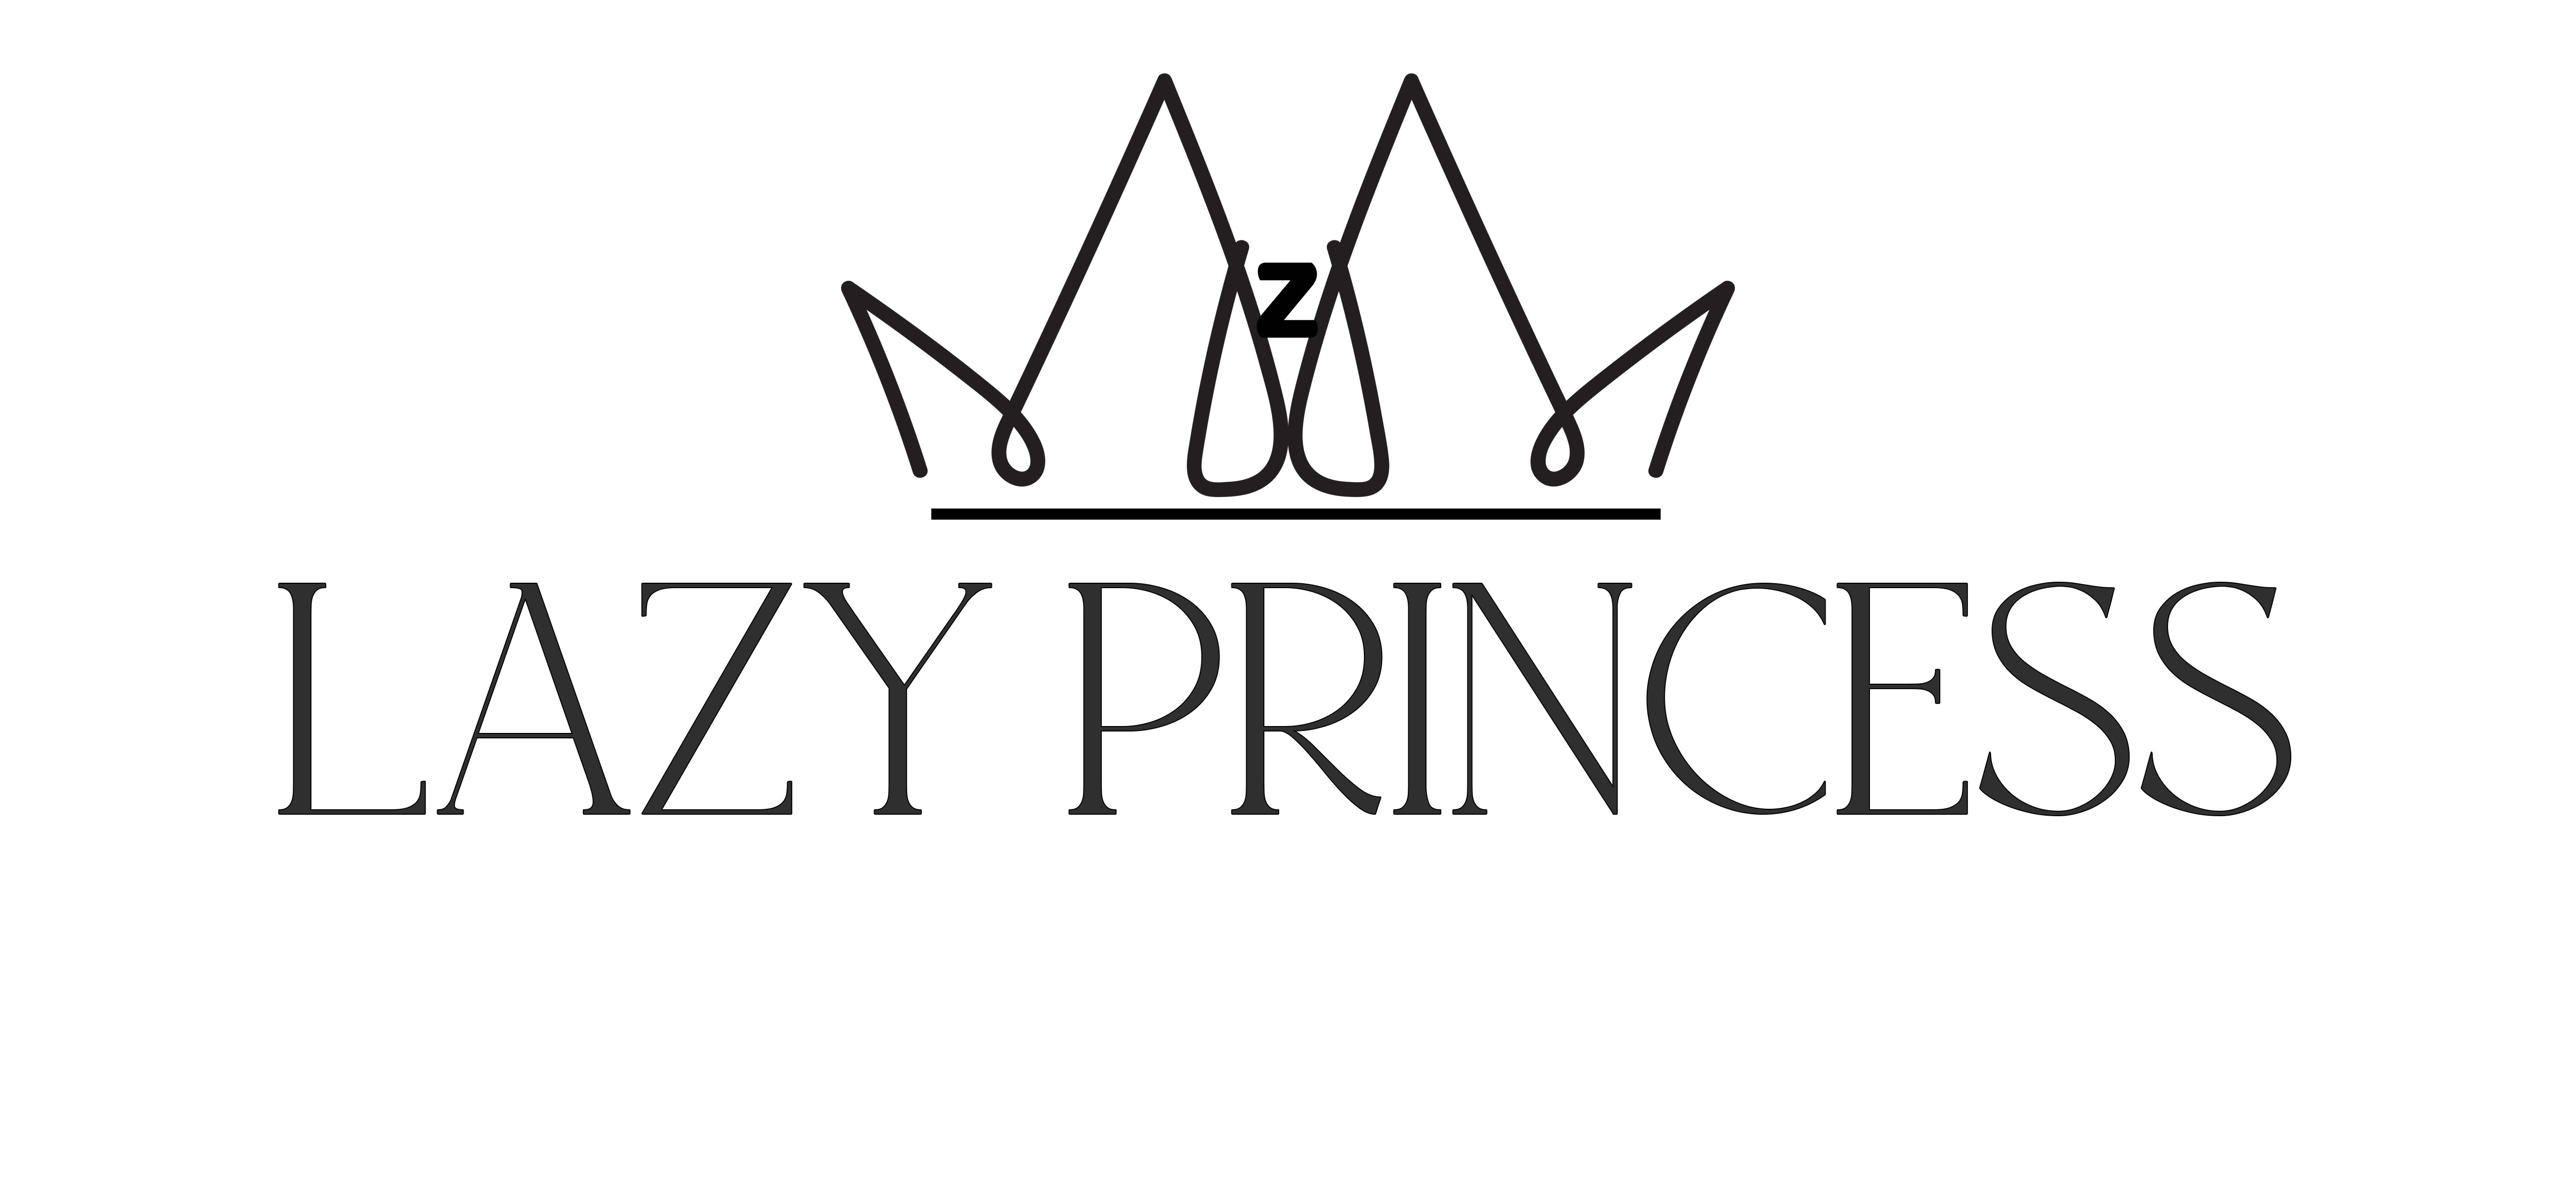 181-lazy-princess-logo-1.jpg